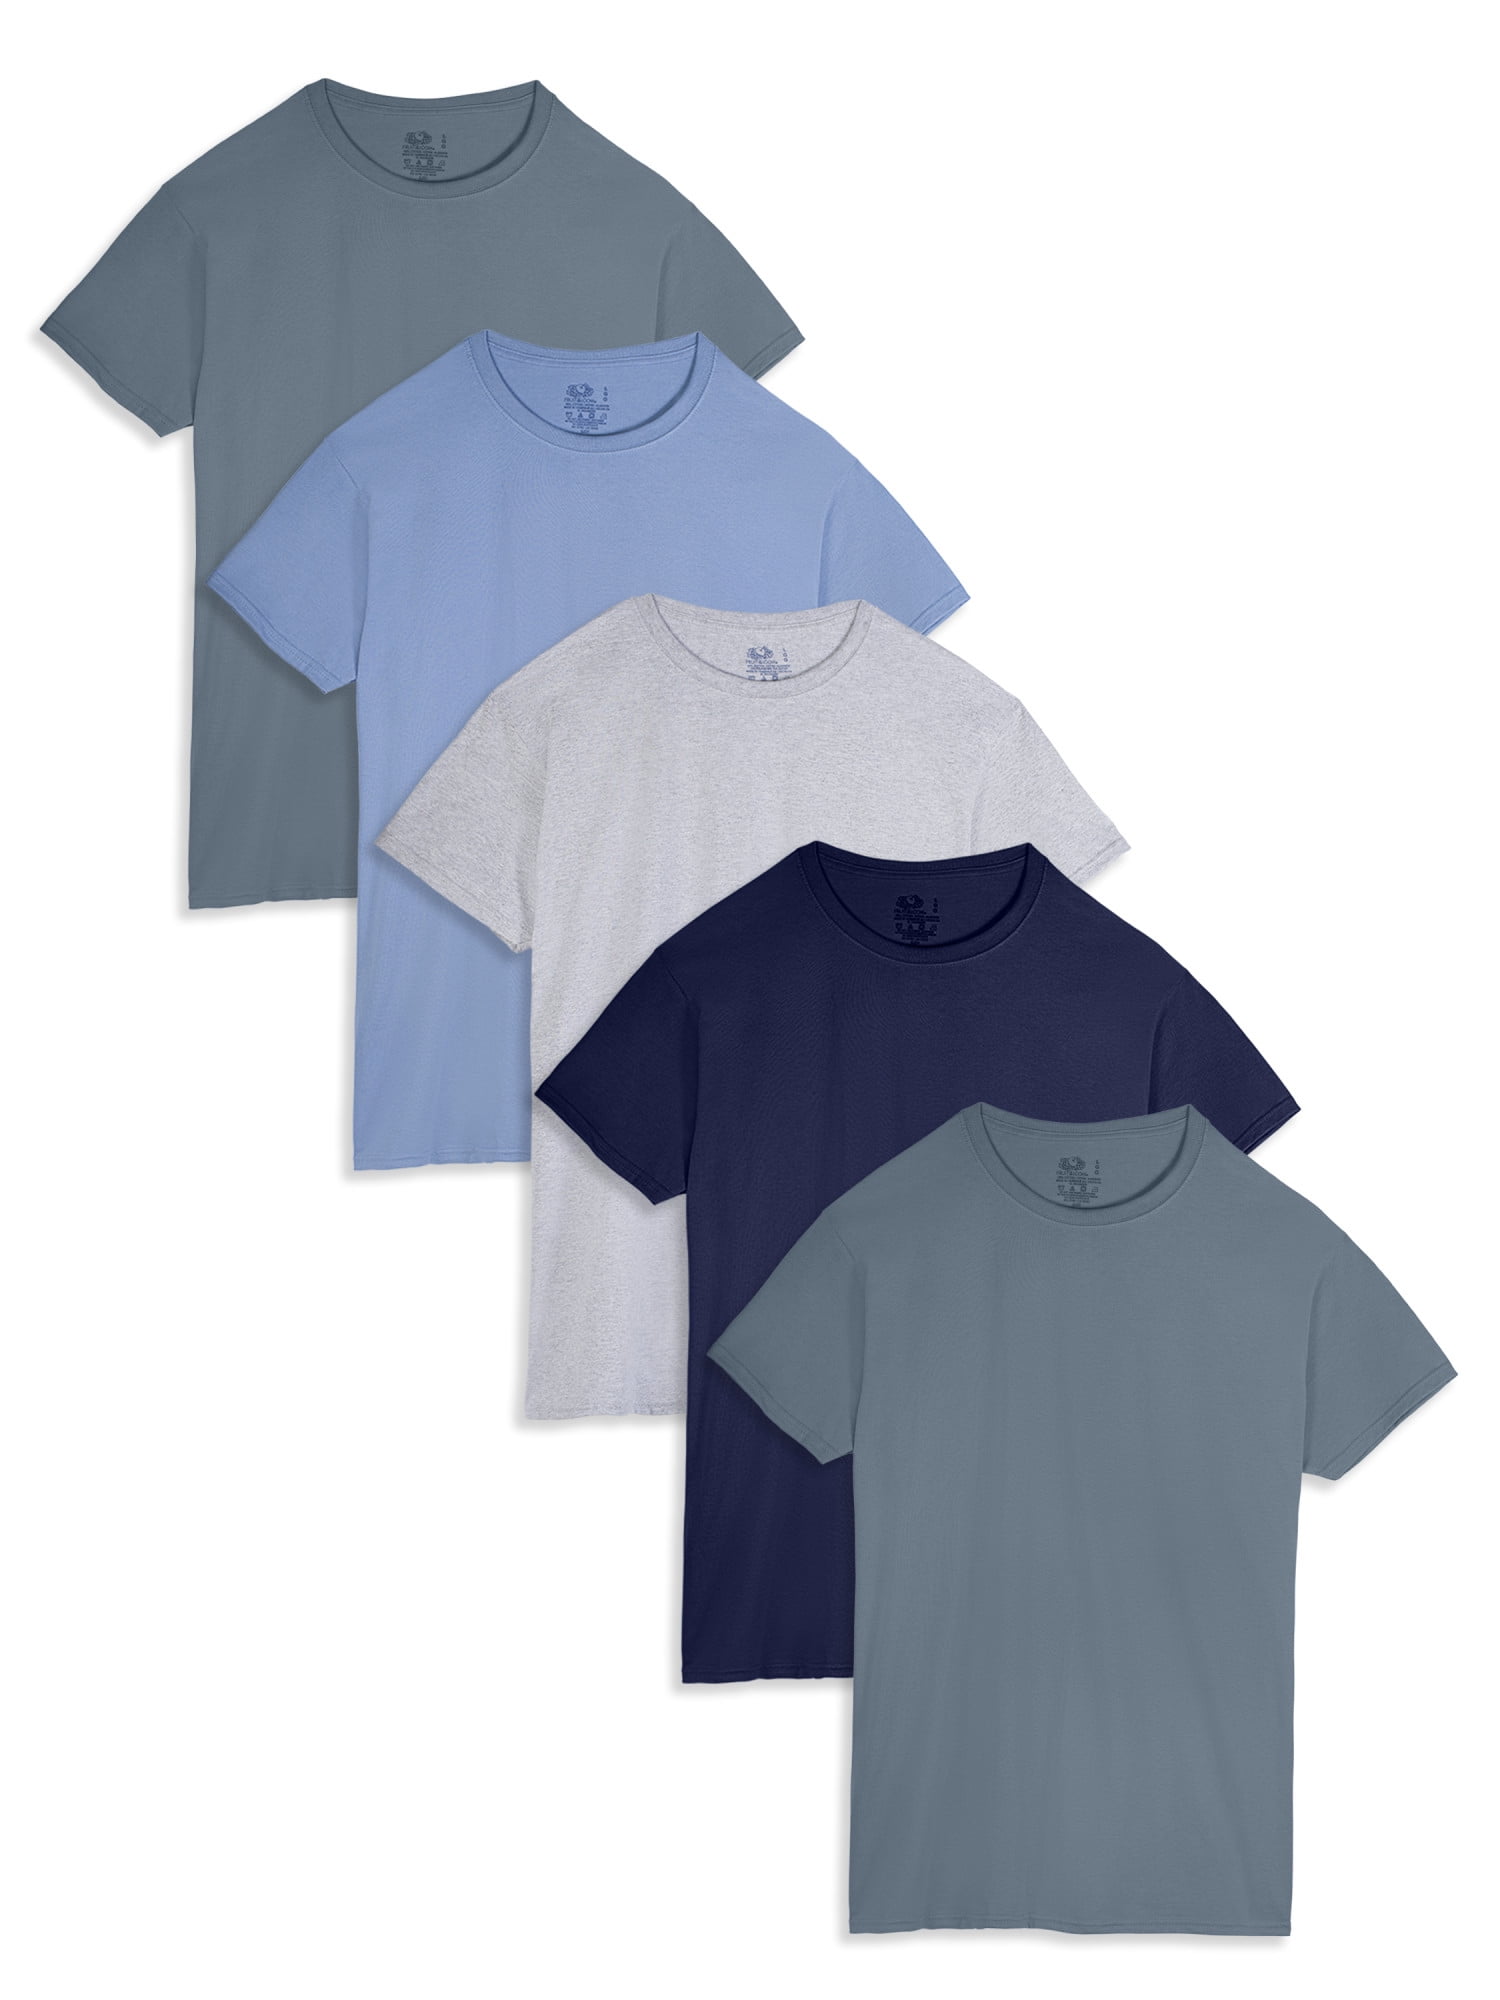 Asics Shirt MEN FASHION Shirts & T-shirts Sports discount 84% Blue M 